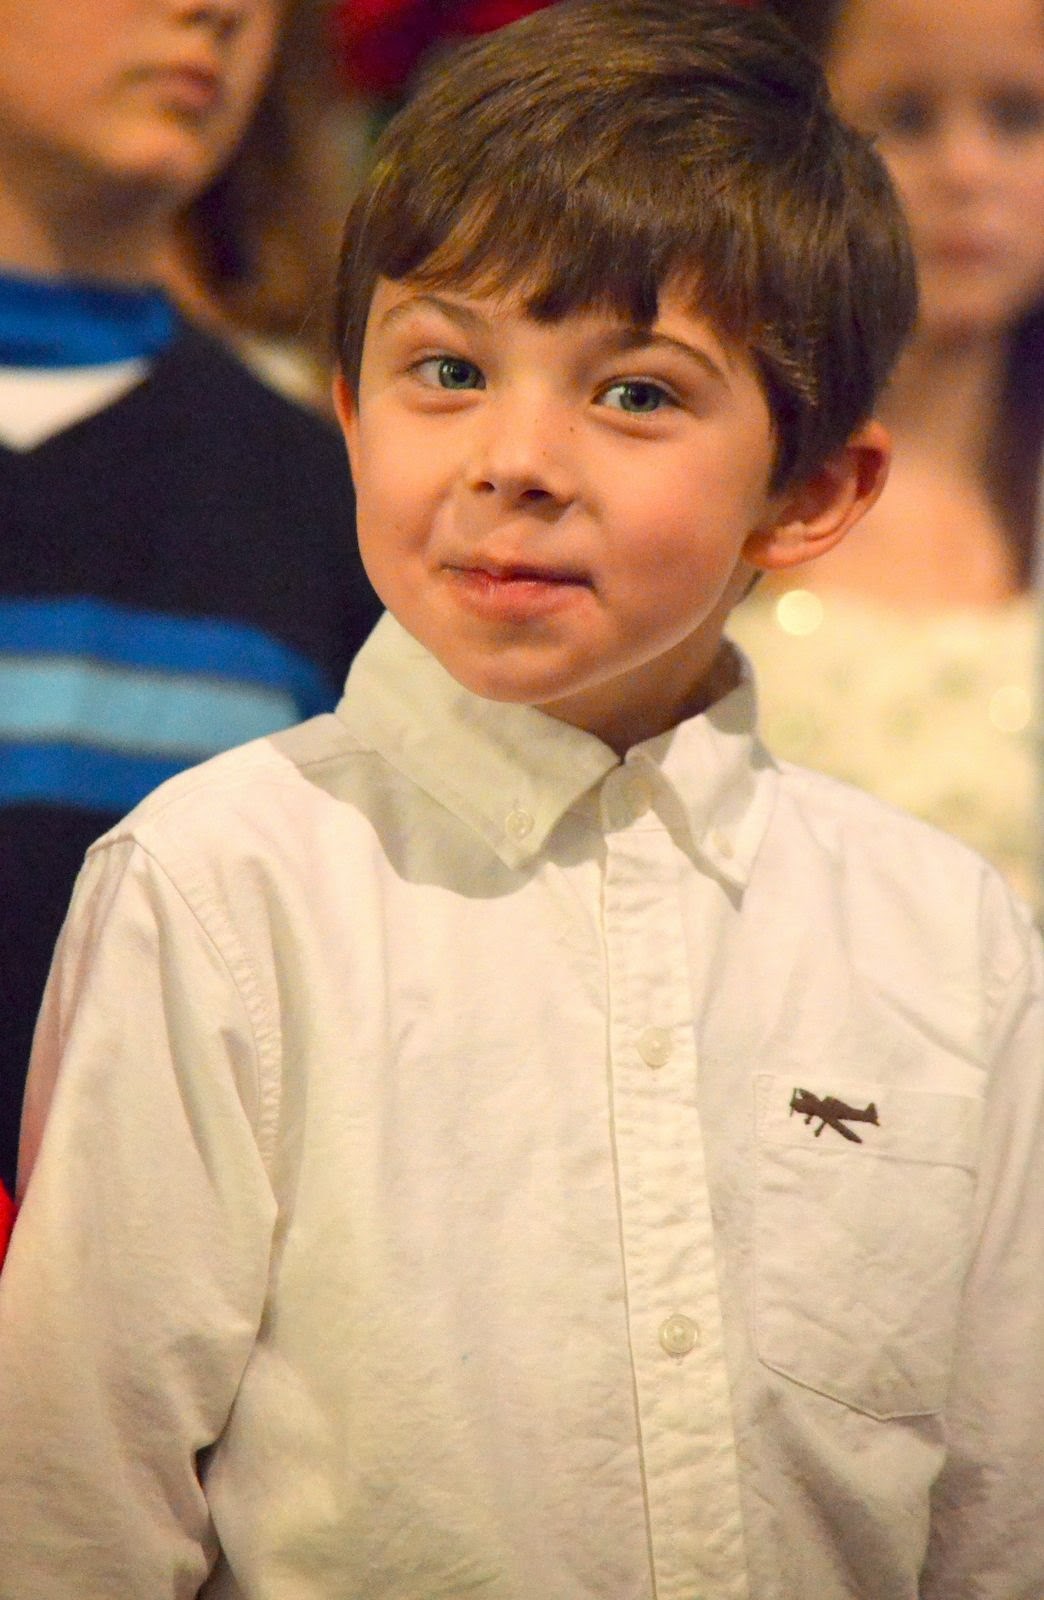 Harrison Elijah - Age 6